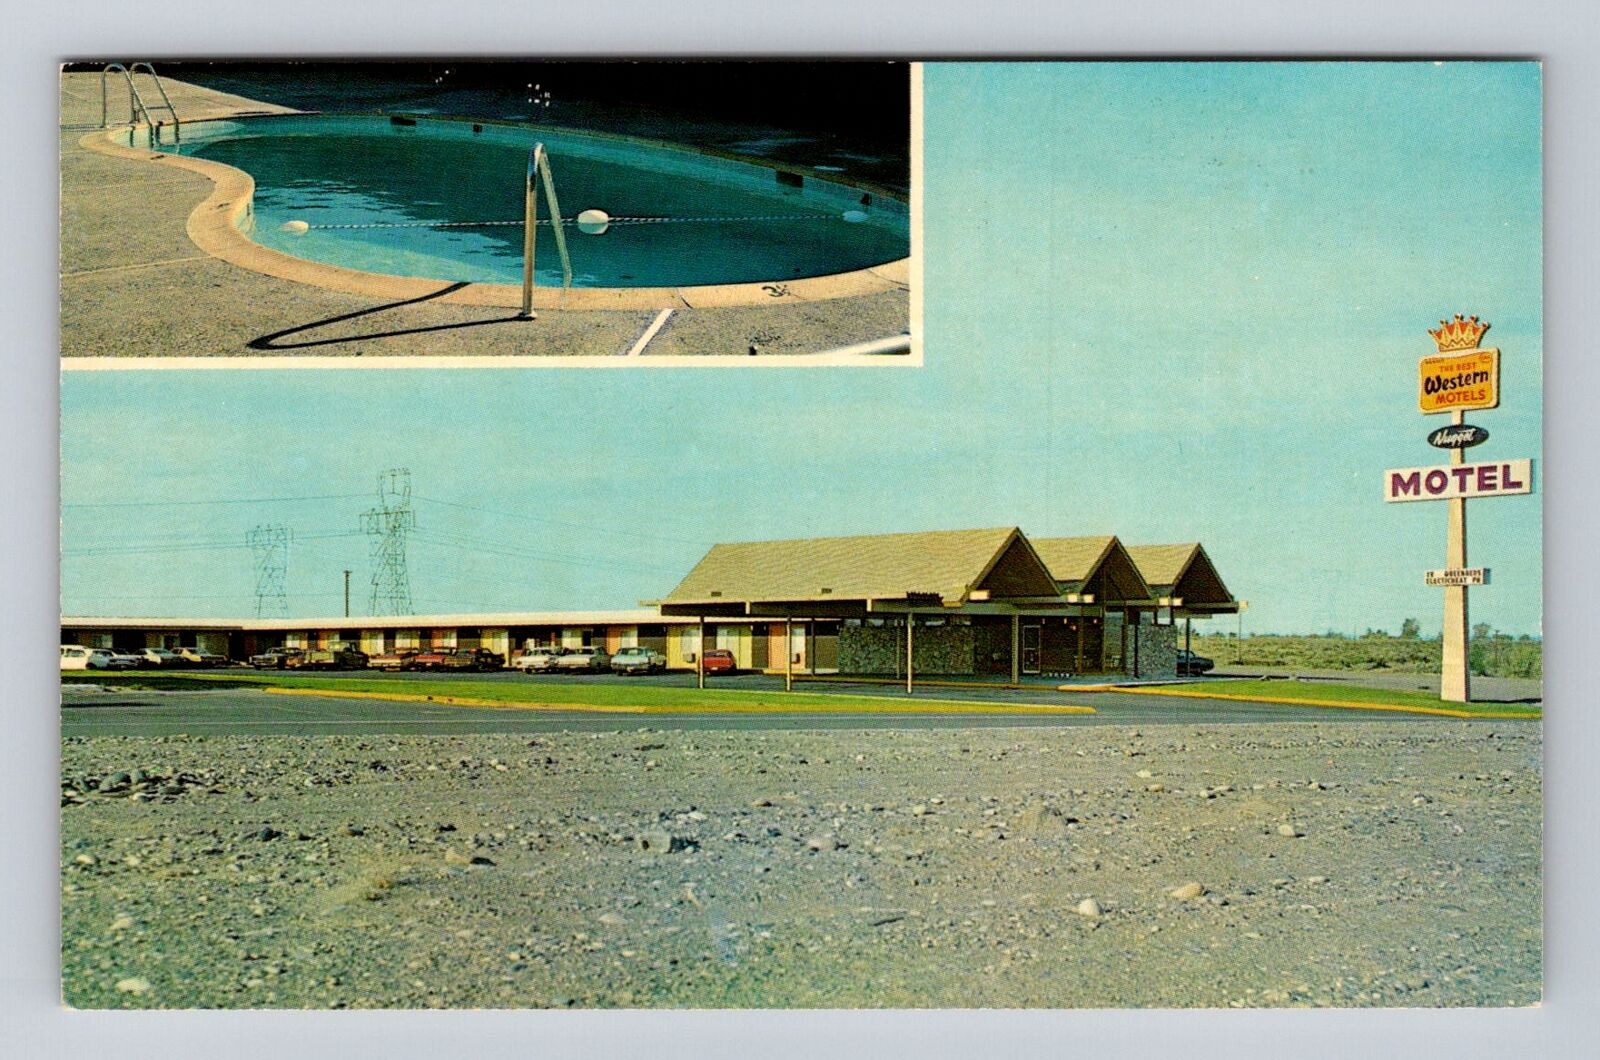 Boardman OR-Oregon, Nugget Motel Advertising, Vintage Souvenir Postcard